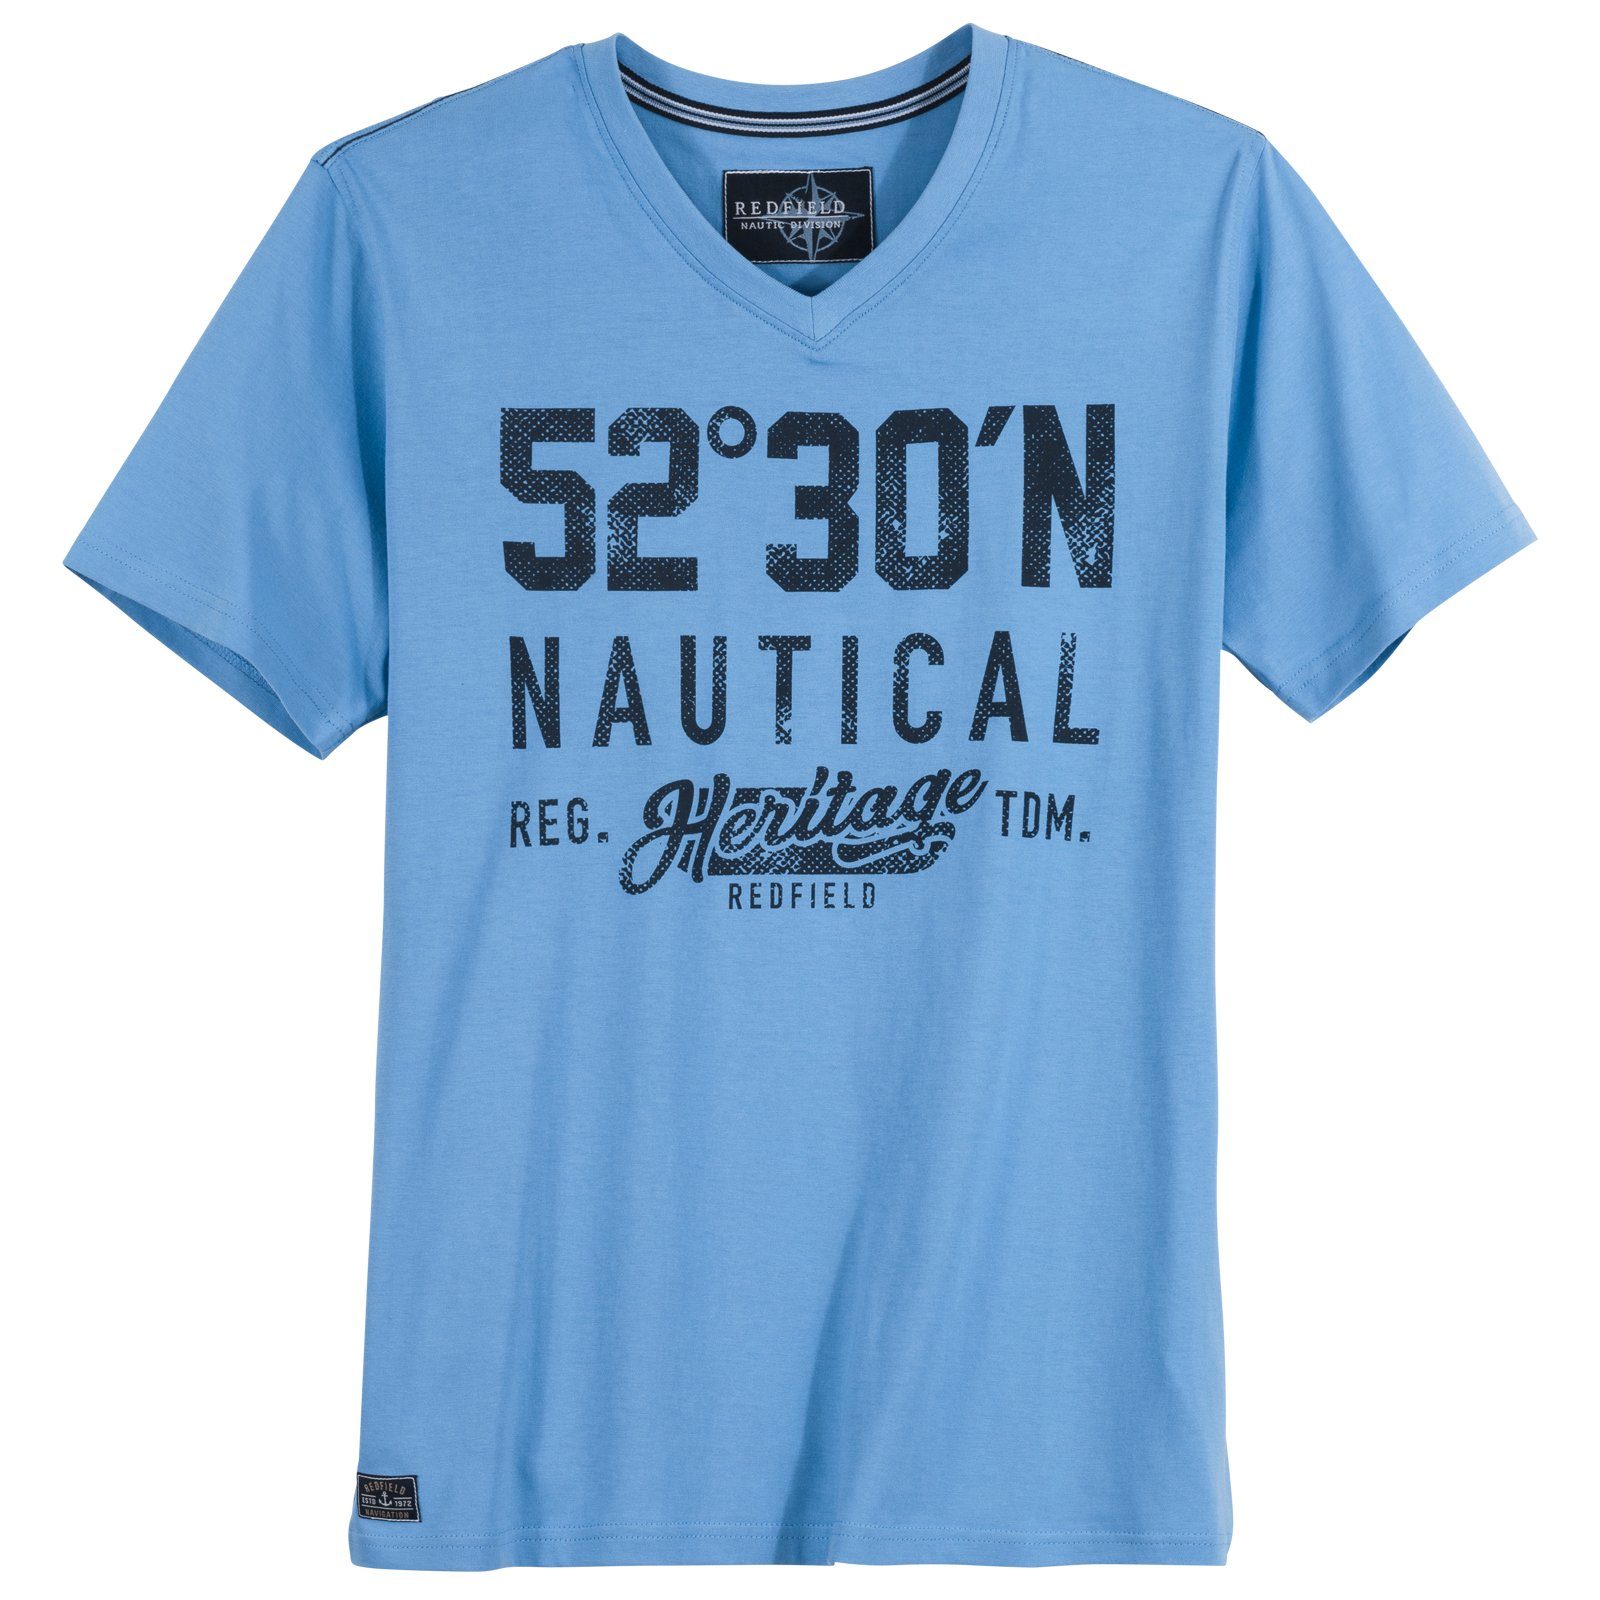 redfield Herren Redfield T-Shirt V-Neck Print-Shirt Übergrößen himmelblau 52°30'N